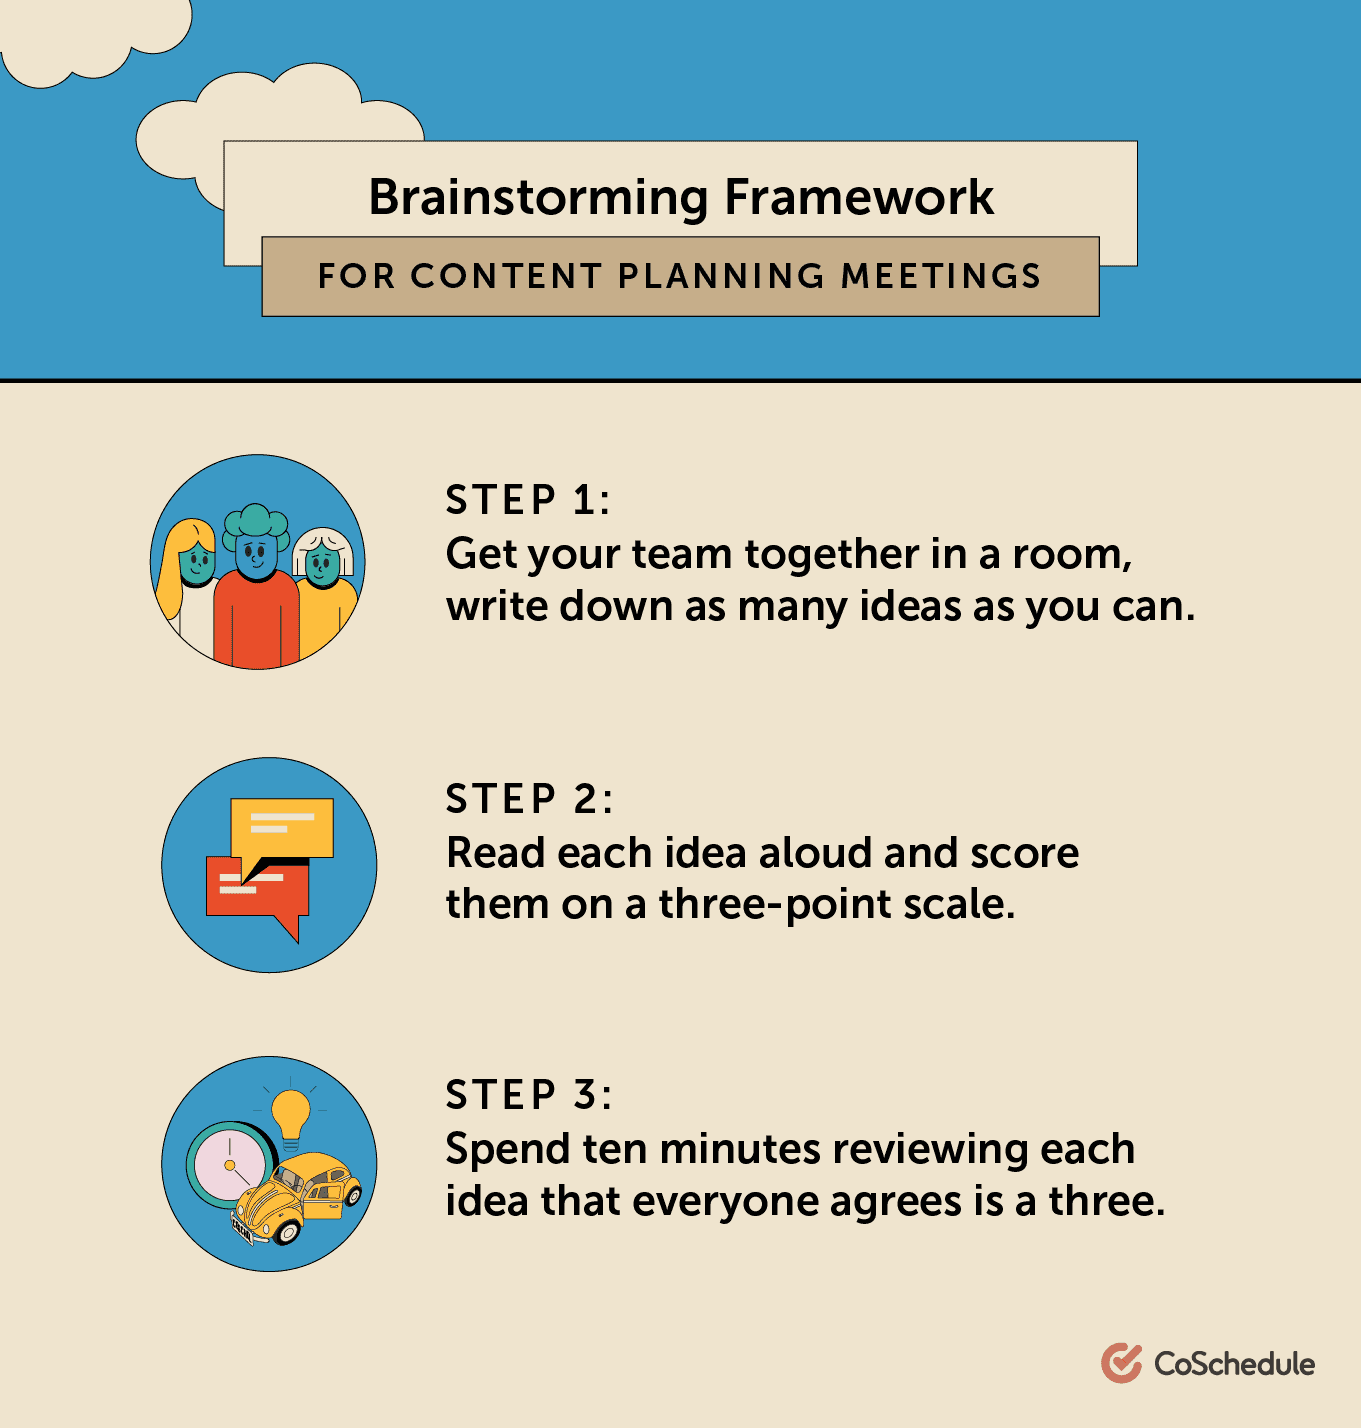 Brainstorming framework for content planning meetings